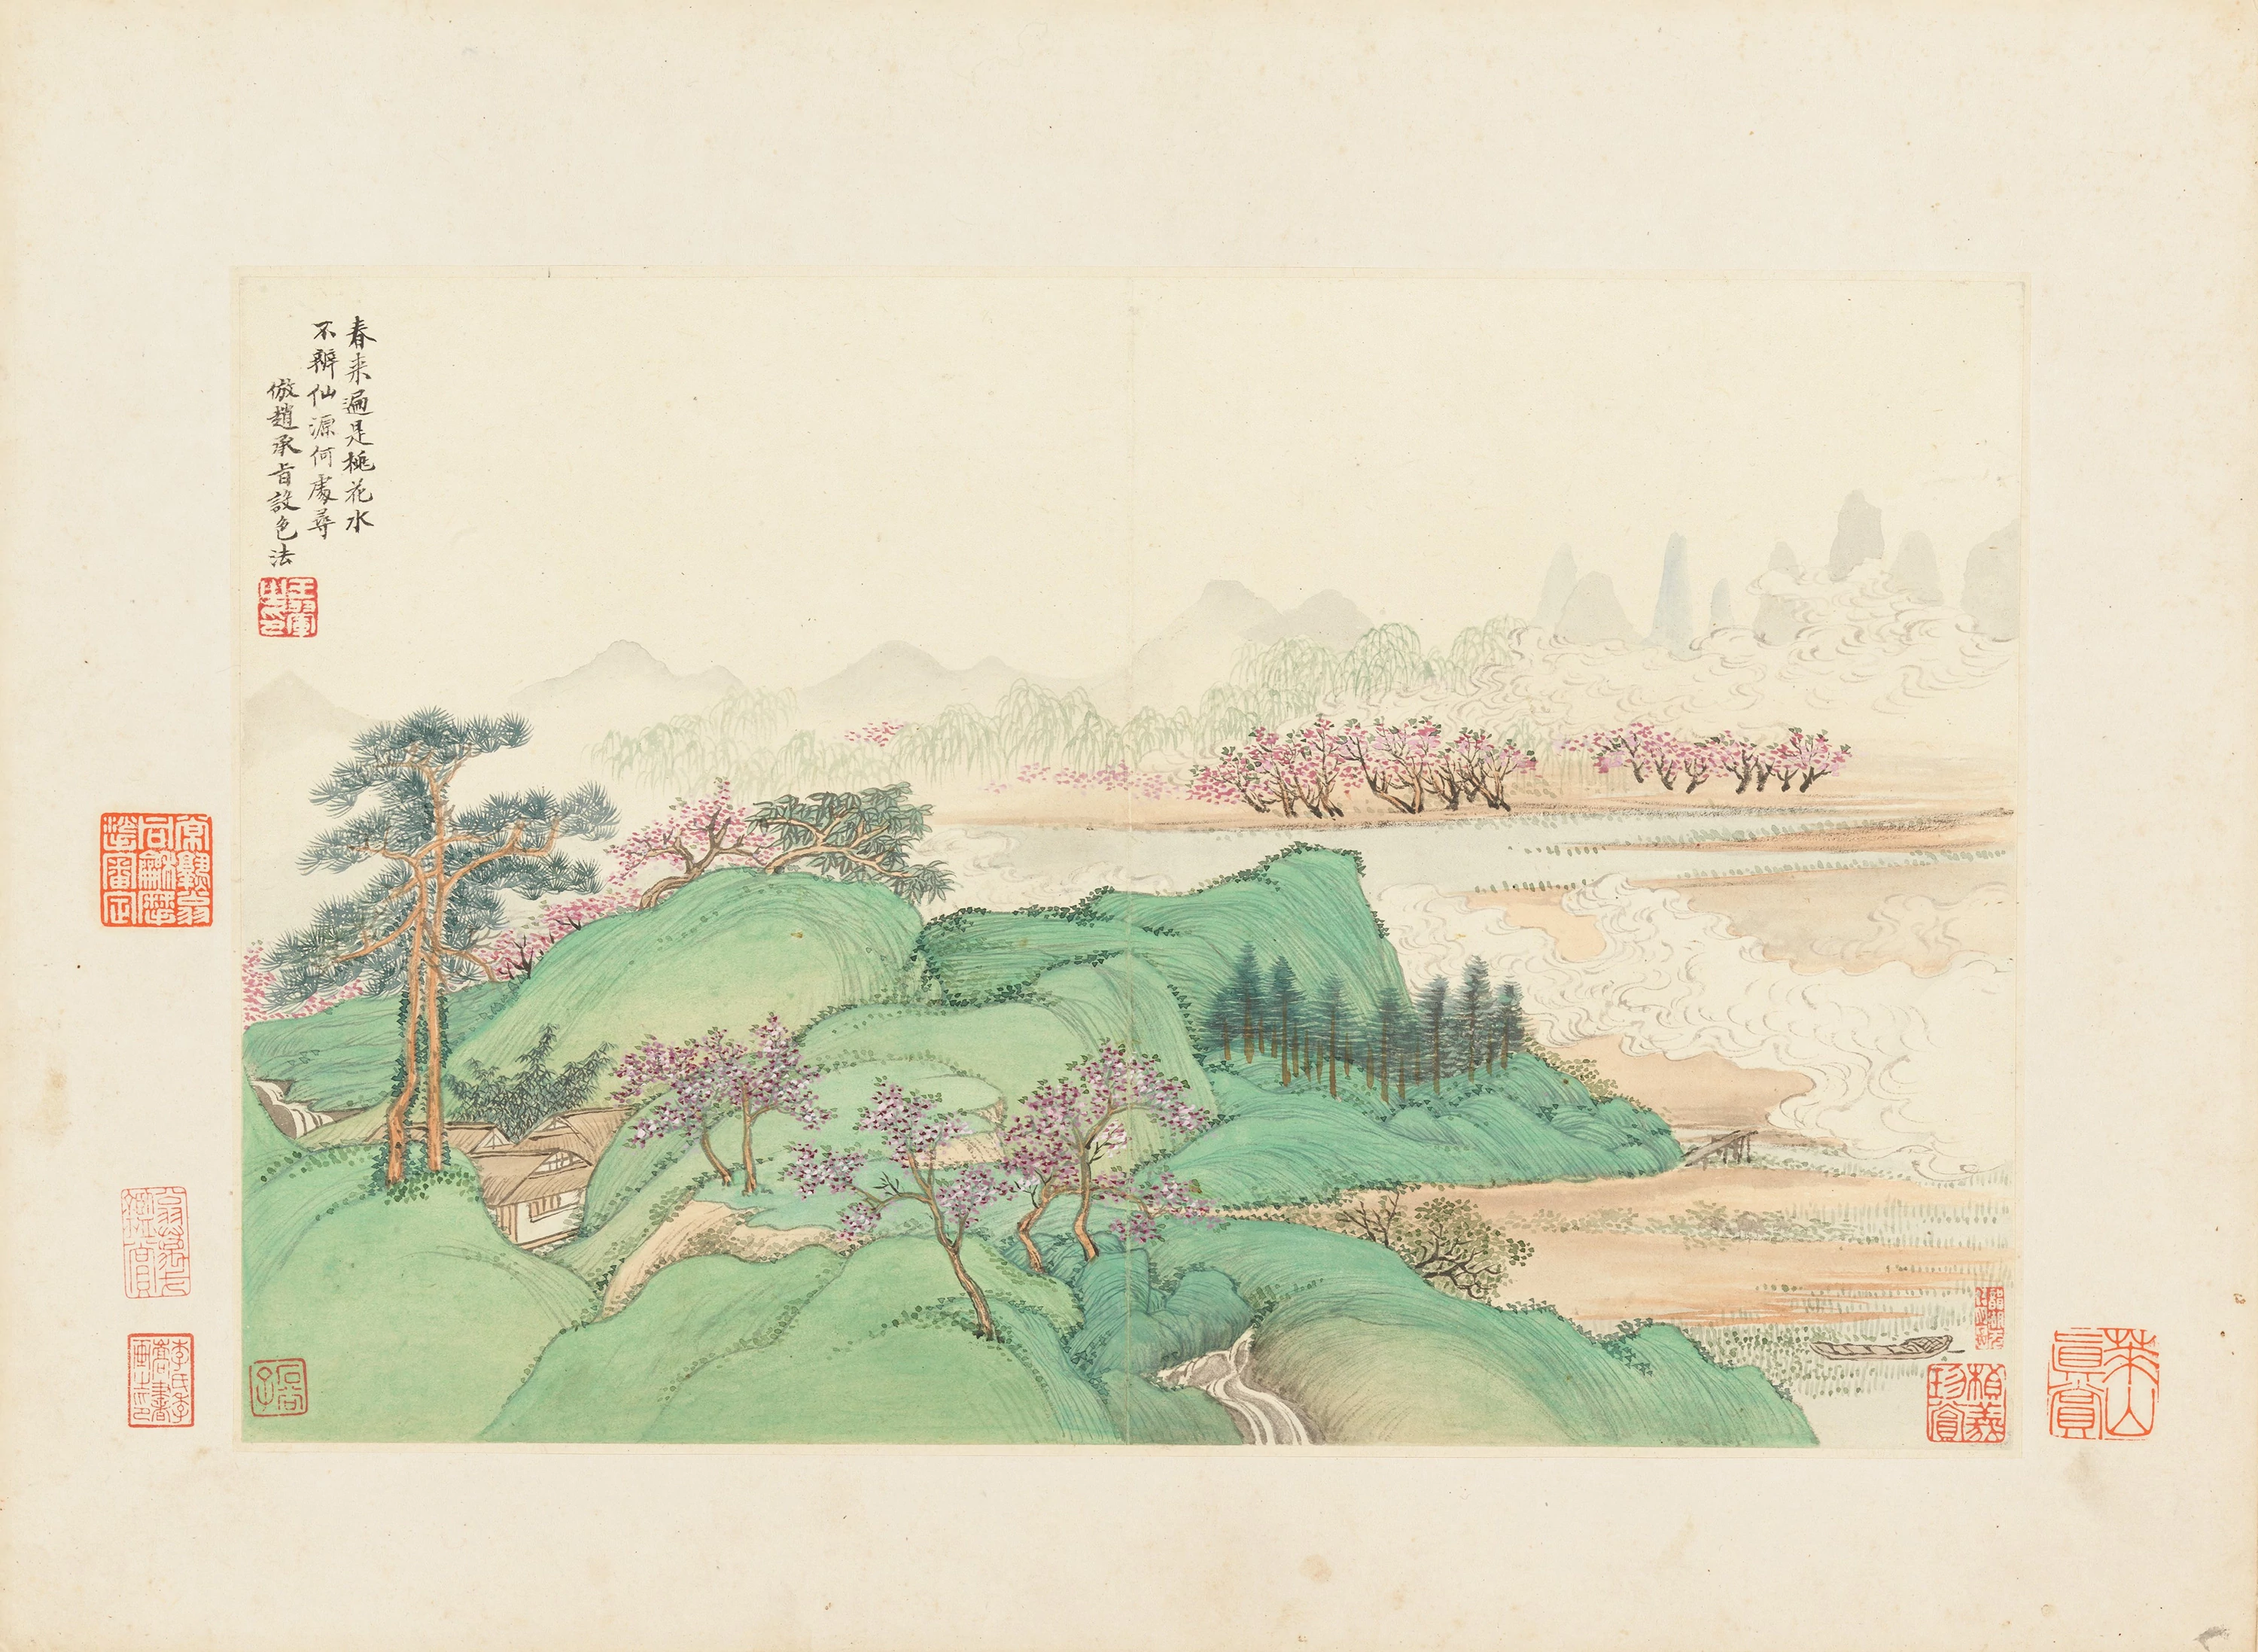 Landscapes 7, 仿古山水圖, Wang Hui (王翚)